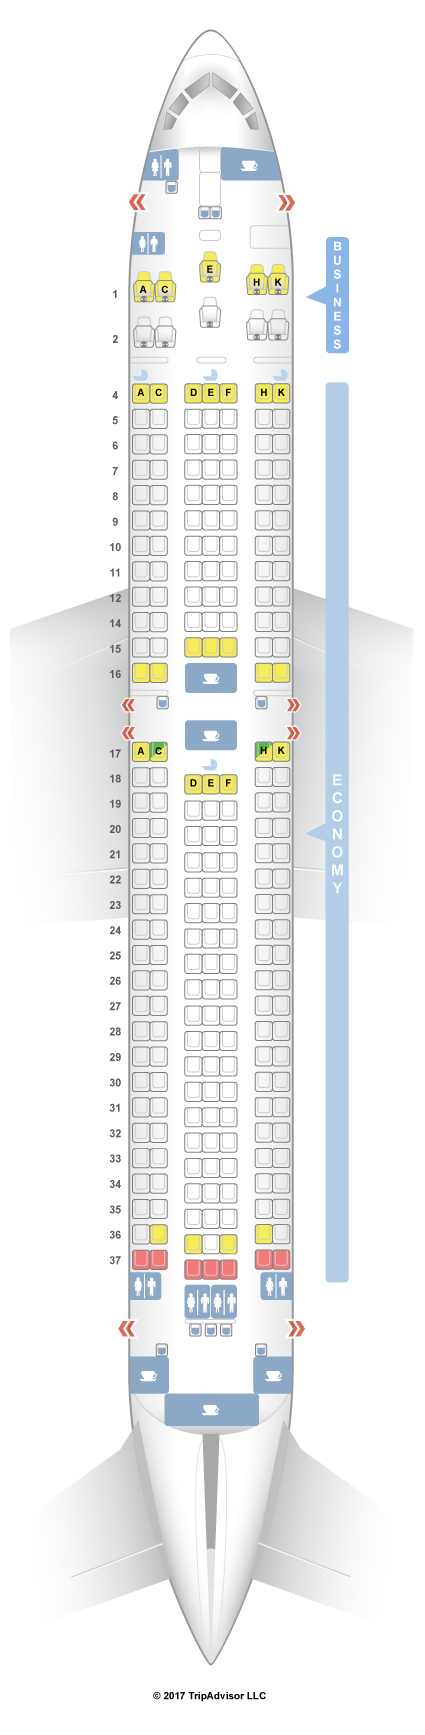 Royal Air Maroc Boeing 767 300 Seating Chart